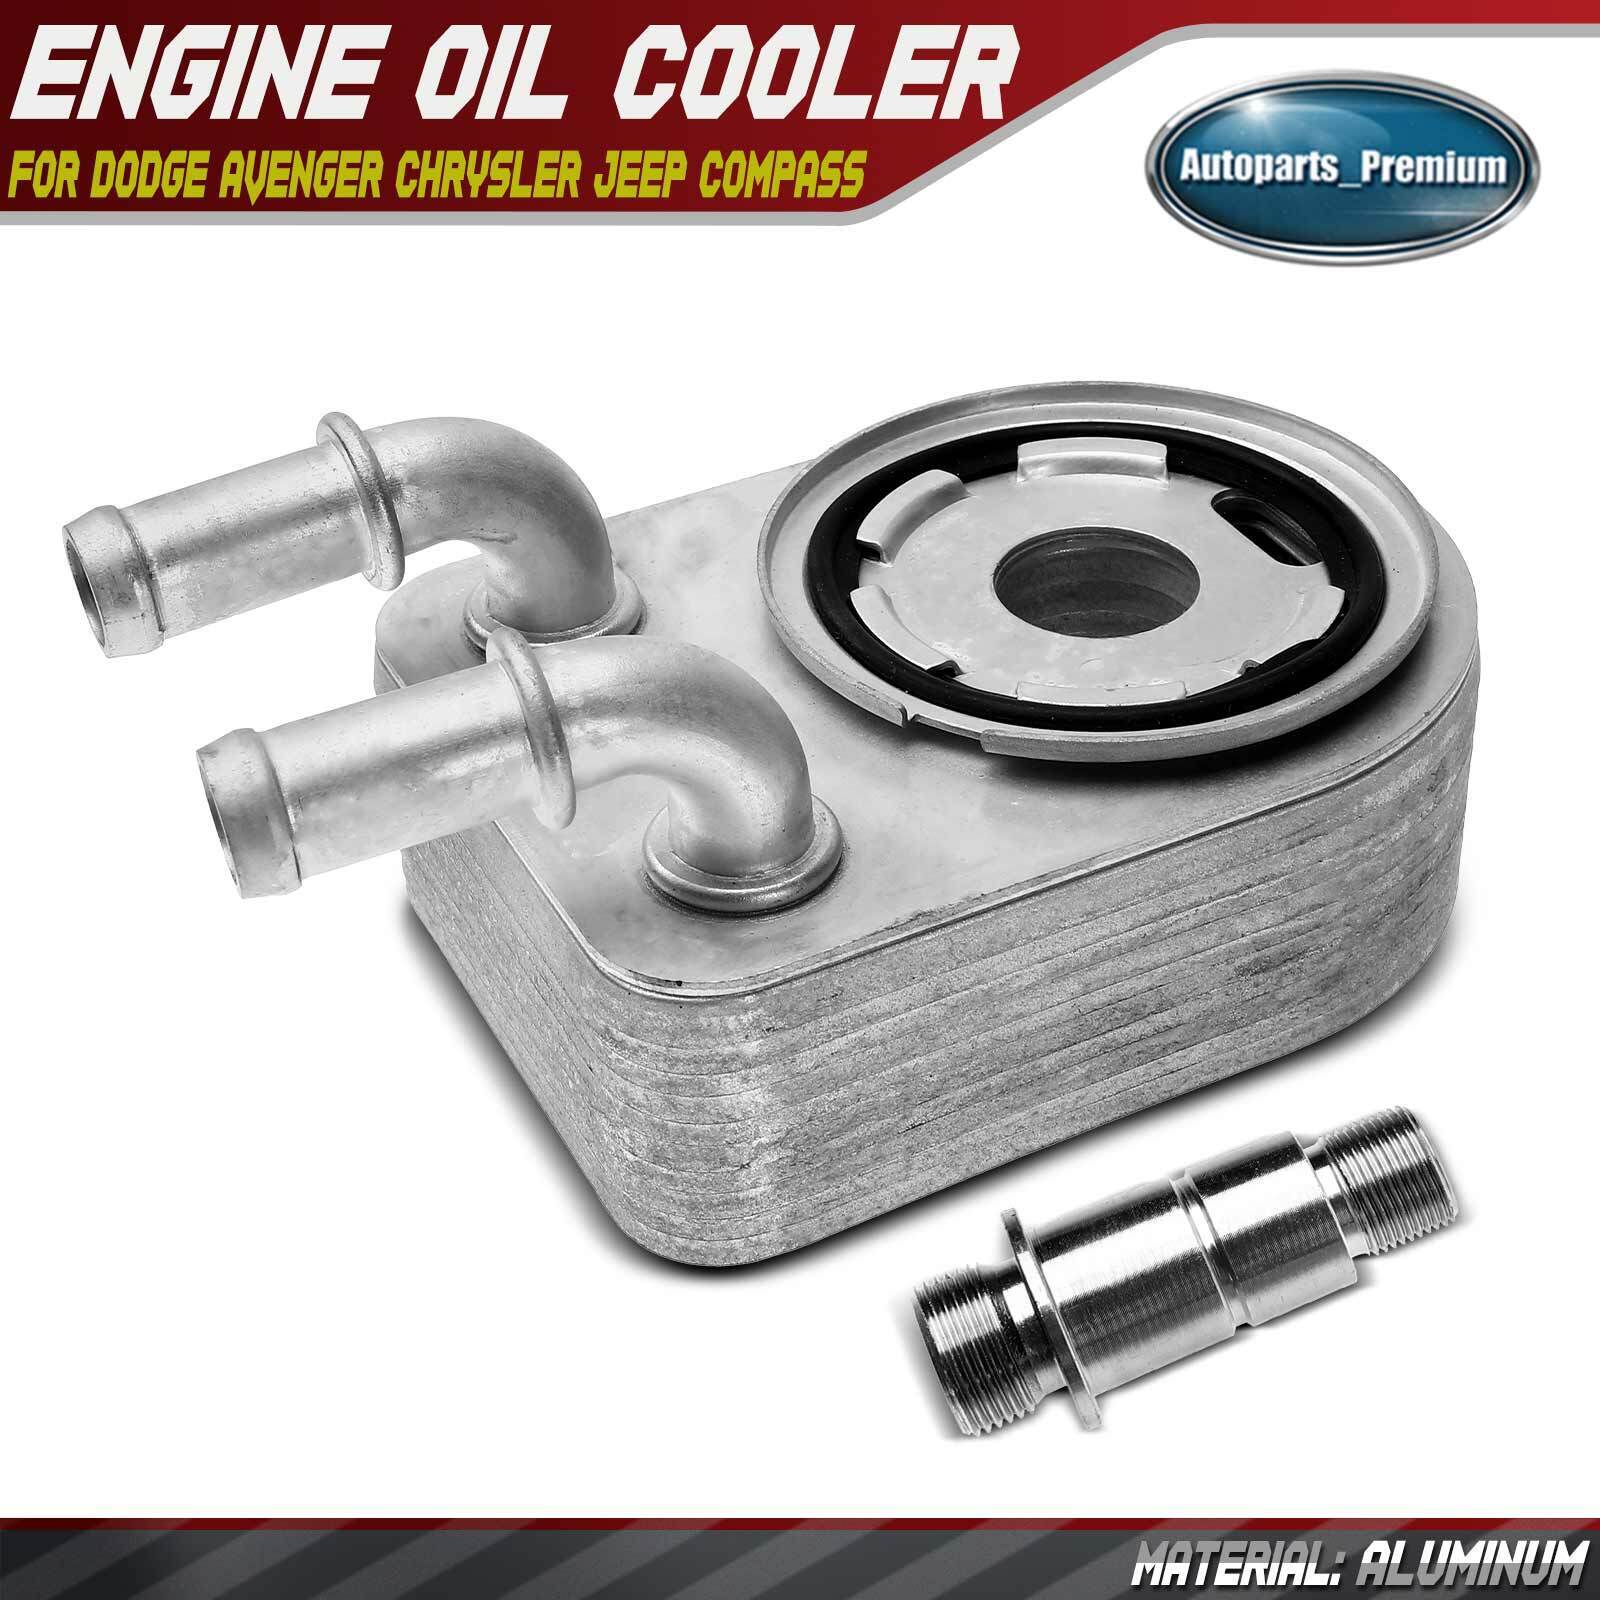 Engine Oil Cooler for Dodge Avenger Caliber Journey Chrysler 200 Jeep Compass